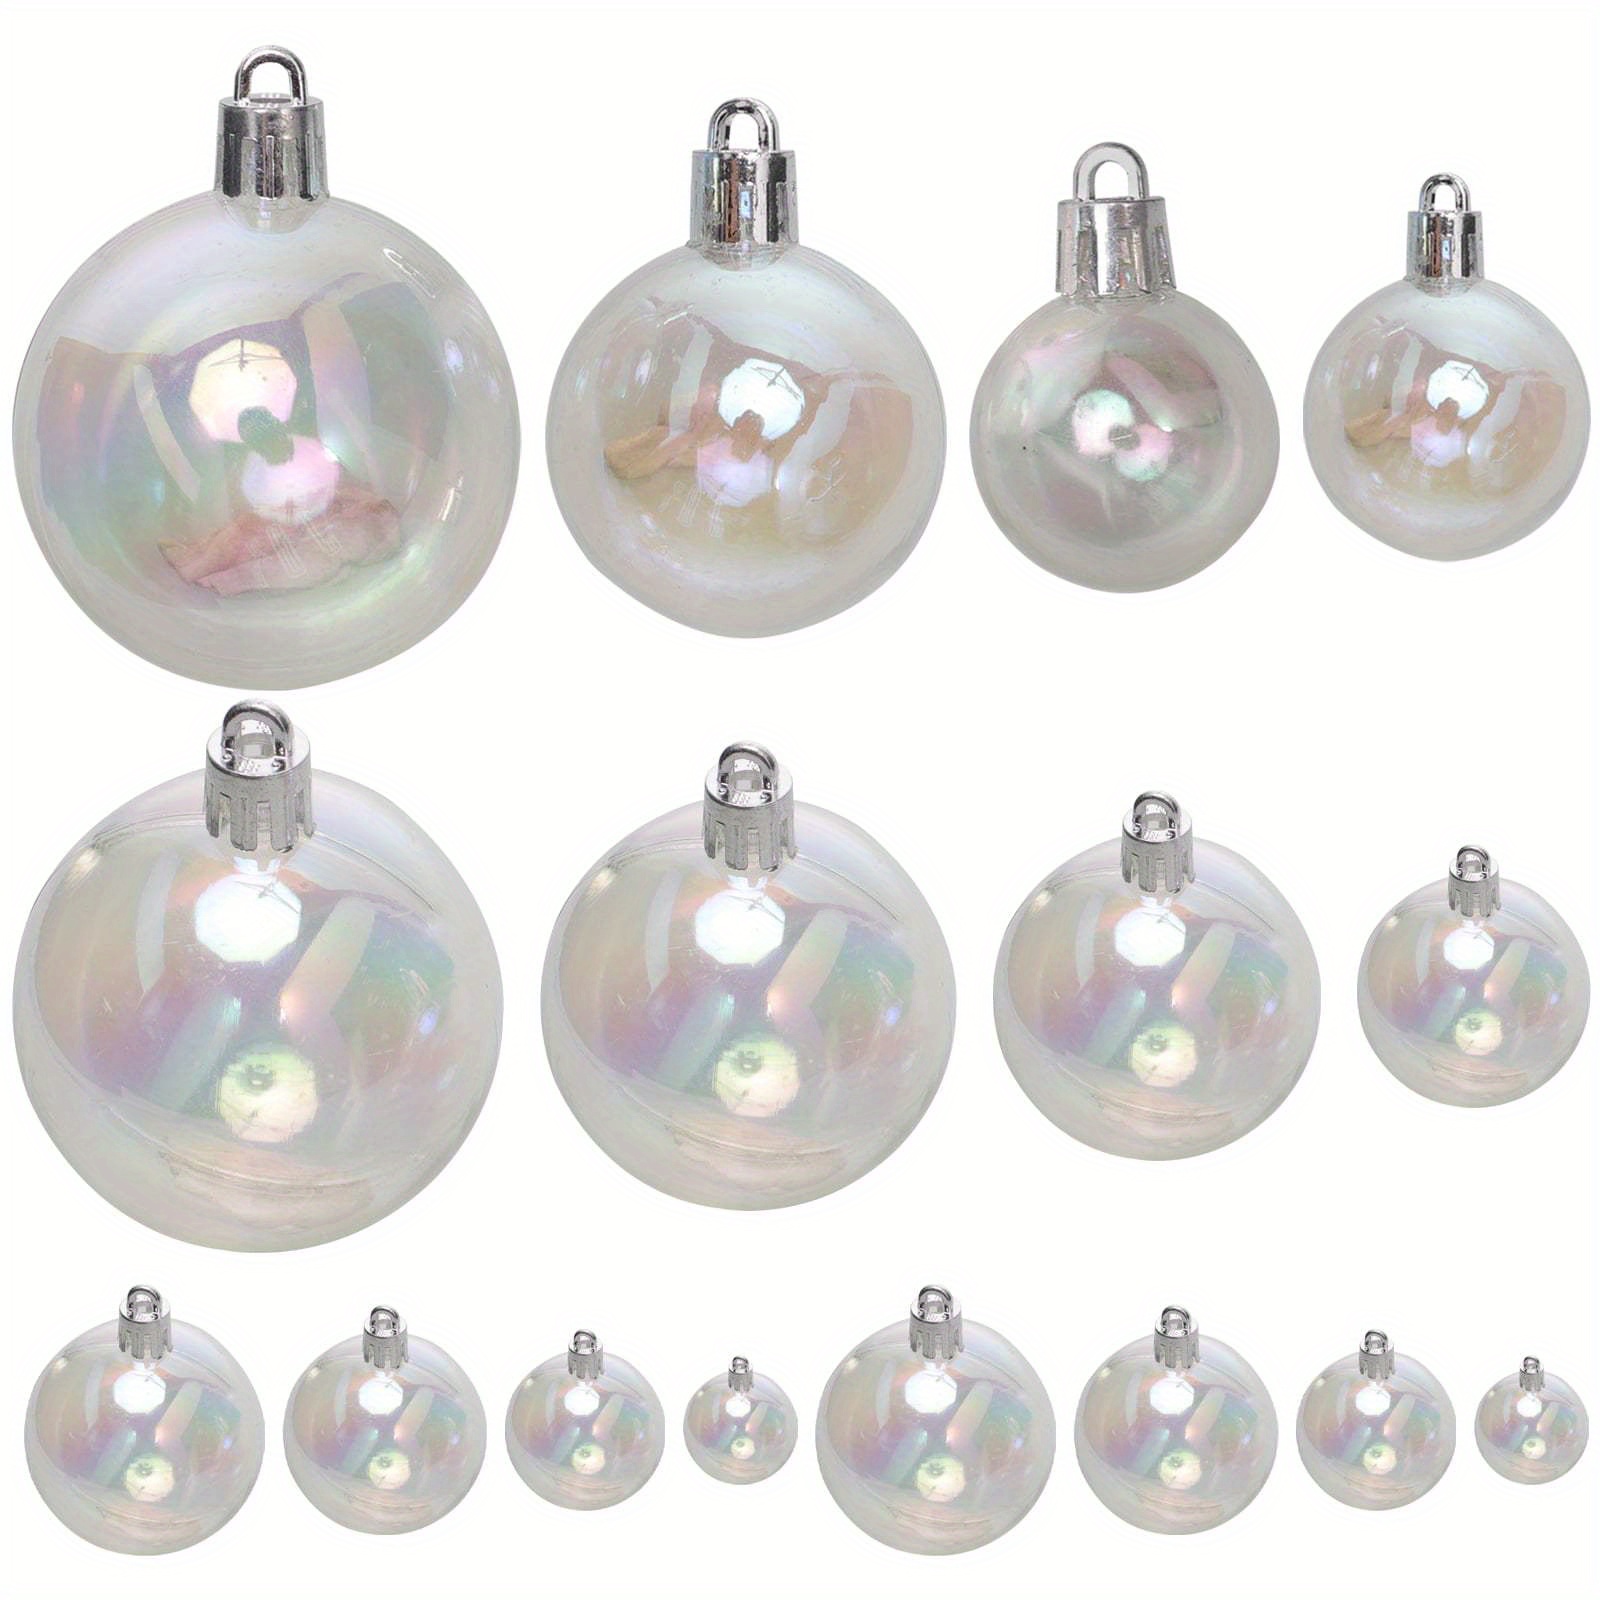 

Toyvian 36 Pcs Christmas Baubles Round Balls Xmas Tree Party Balls Ornament (transparent)